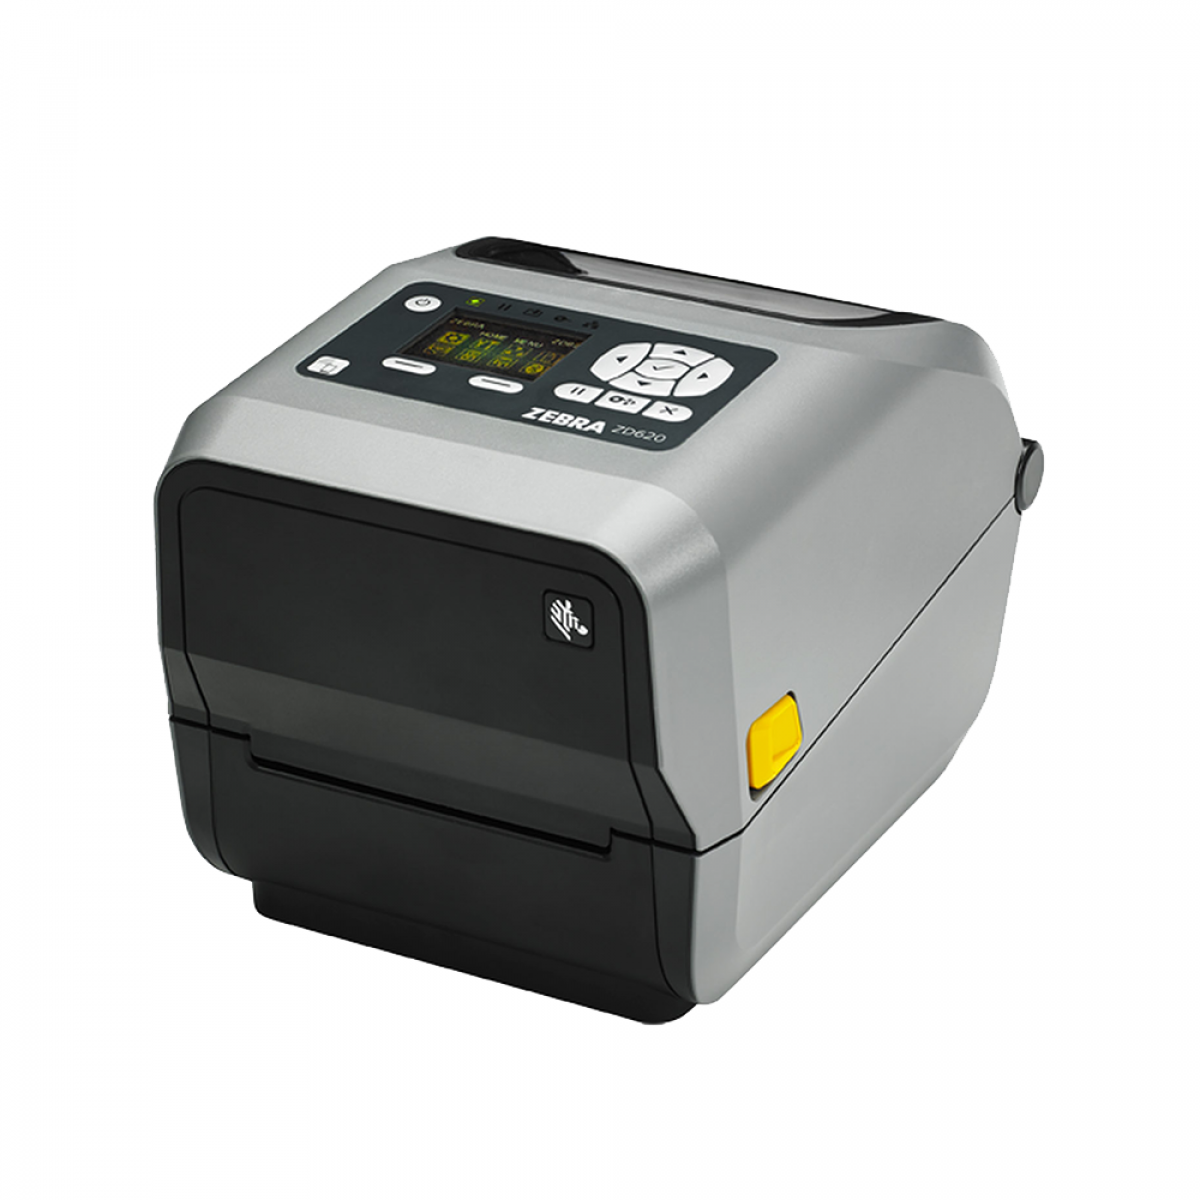 Zebra ZD620 4-inch performance printer